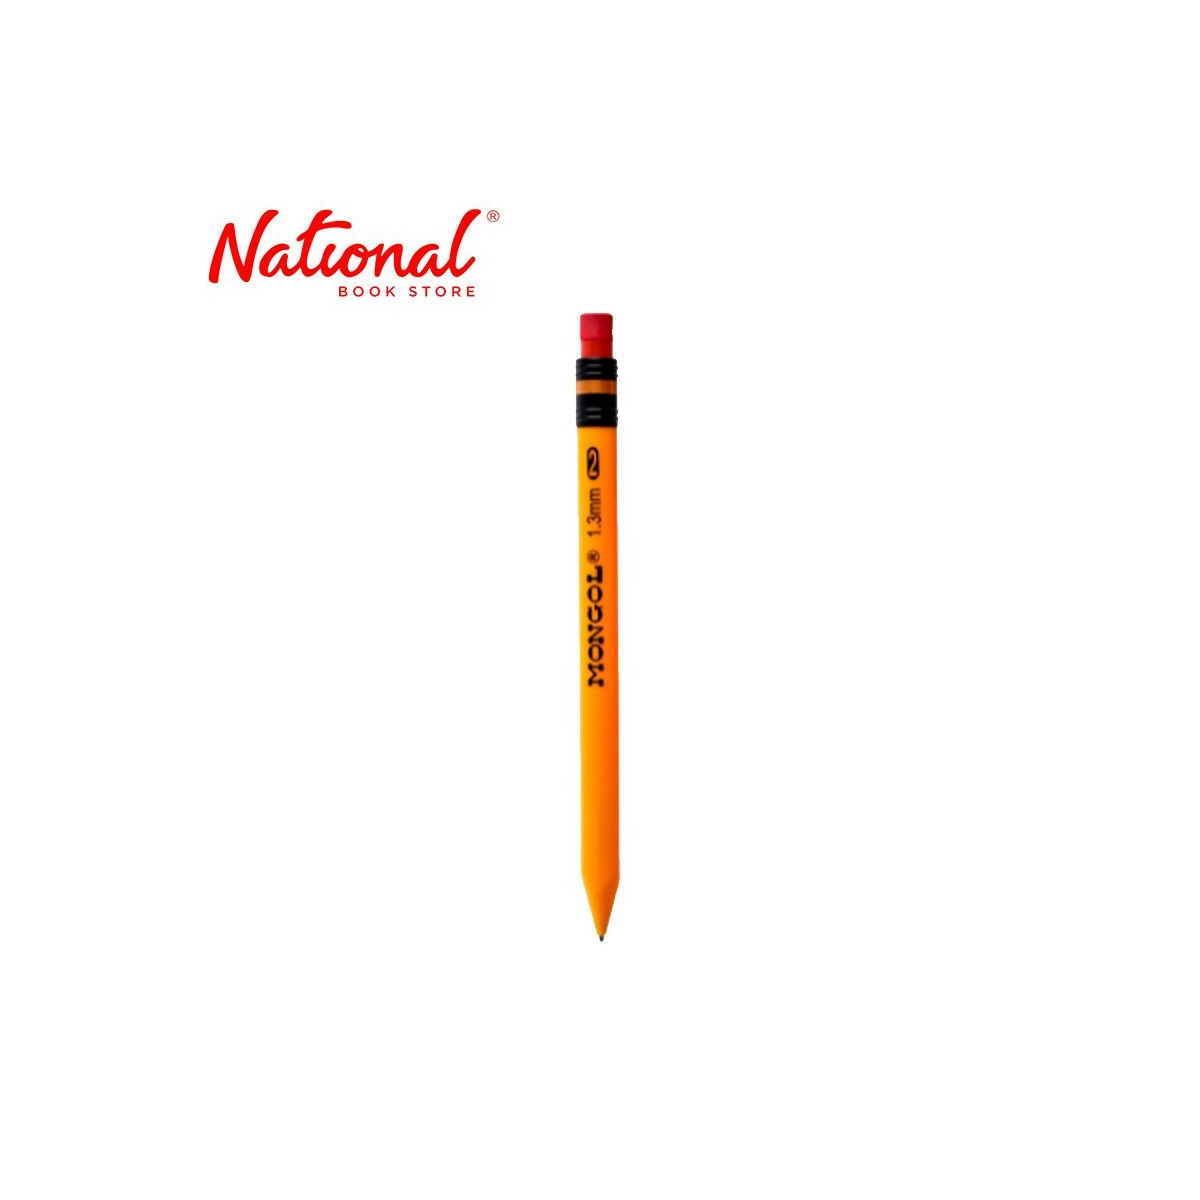 Mongol Mates Mechanical Pencil 4015220 - School Supplies - Writing